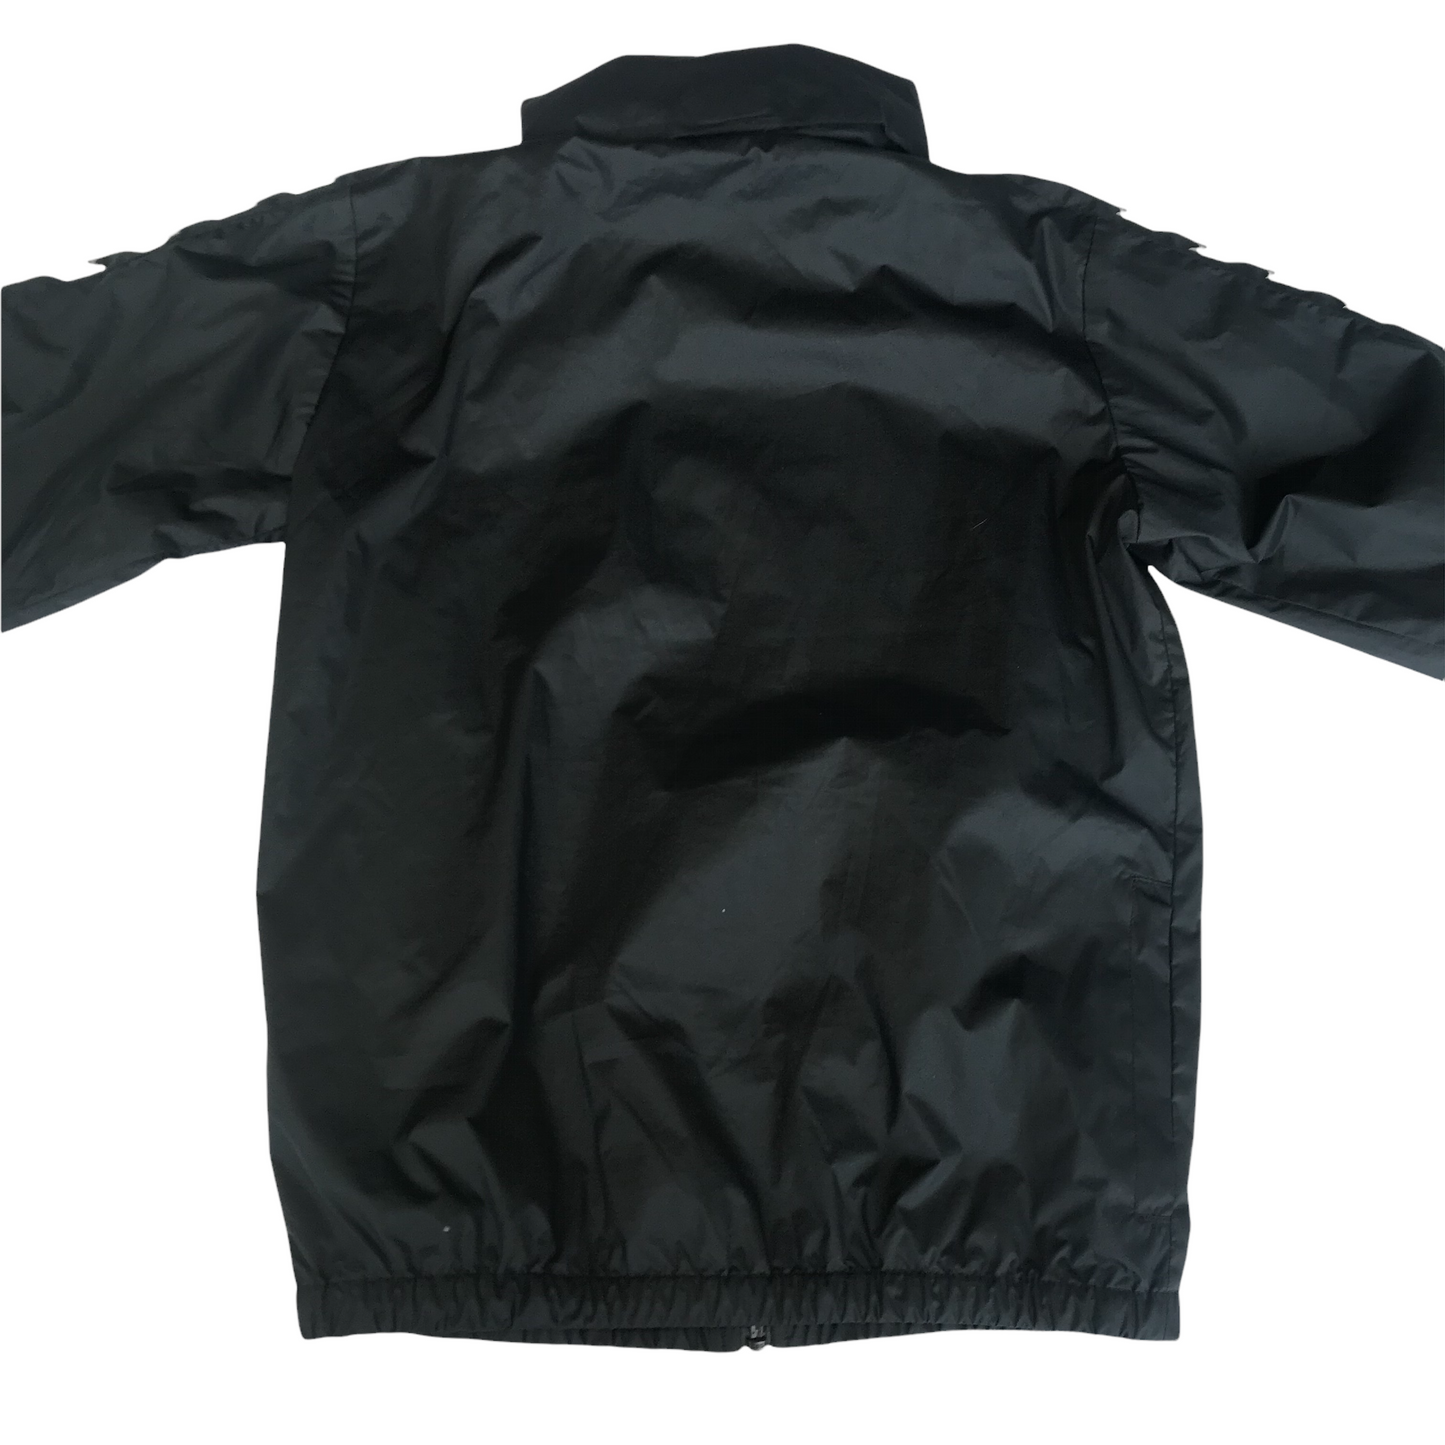 Hummel Black Sports Jacket Age 10